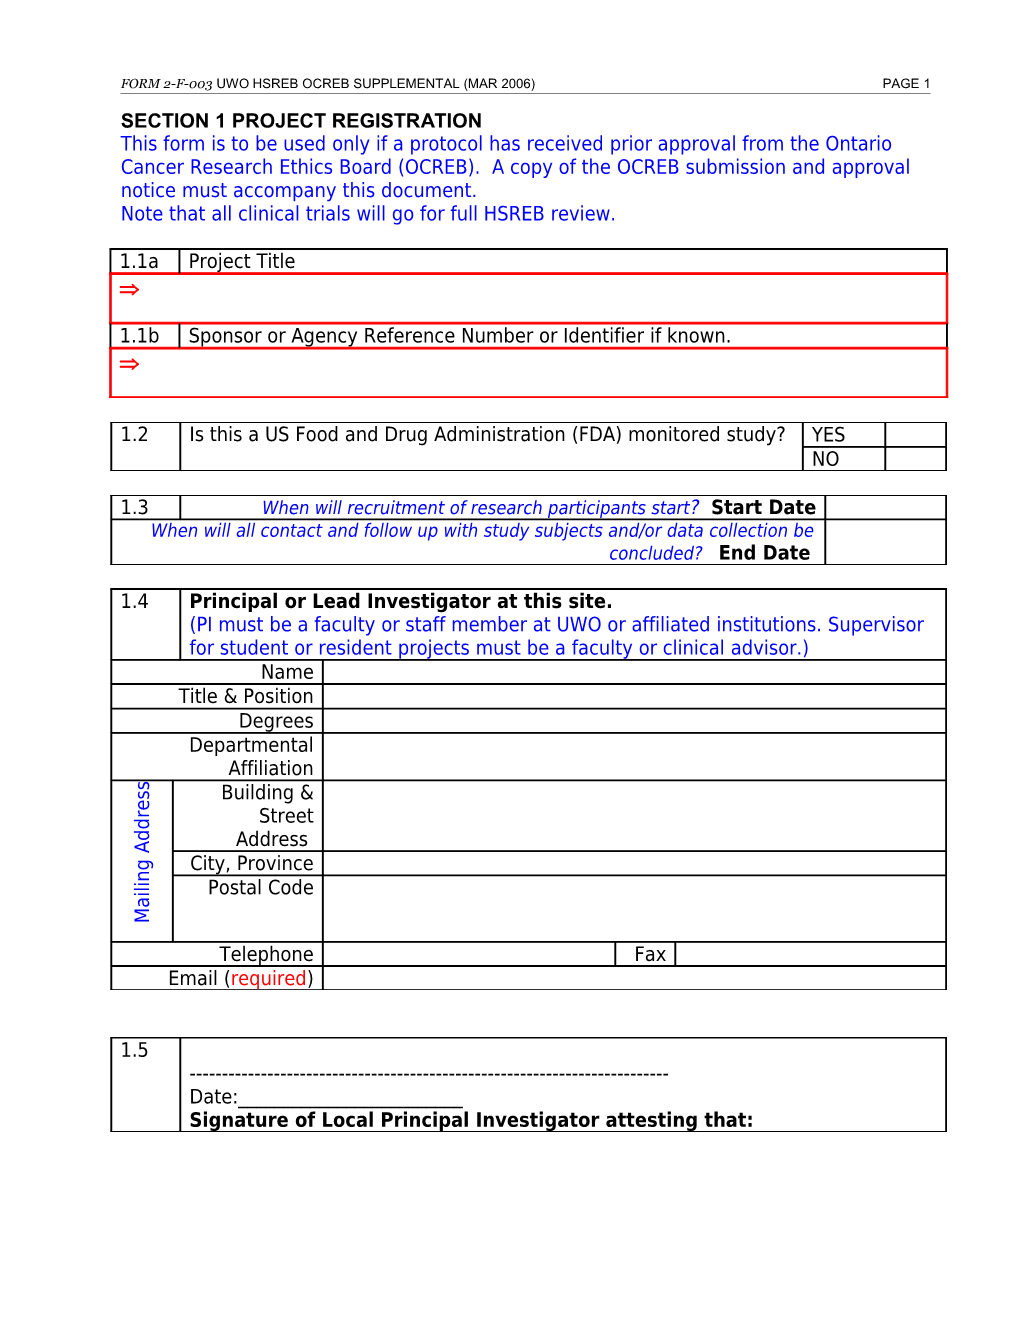 Form 2-F-003 Uwo Hsreb Ocreb Supplemental (Mar 2006) Page 1